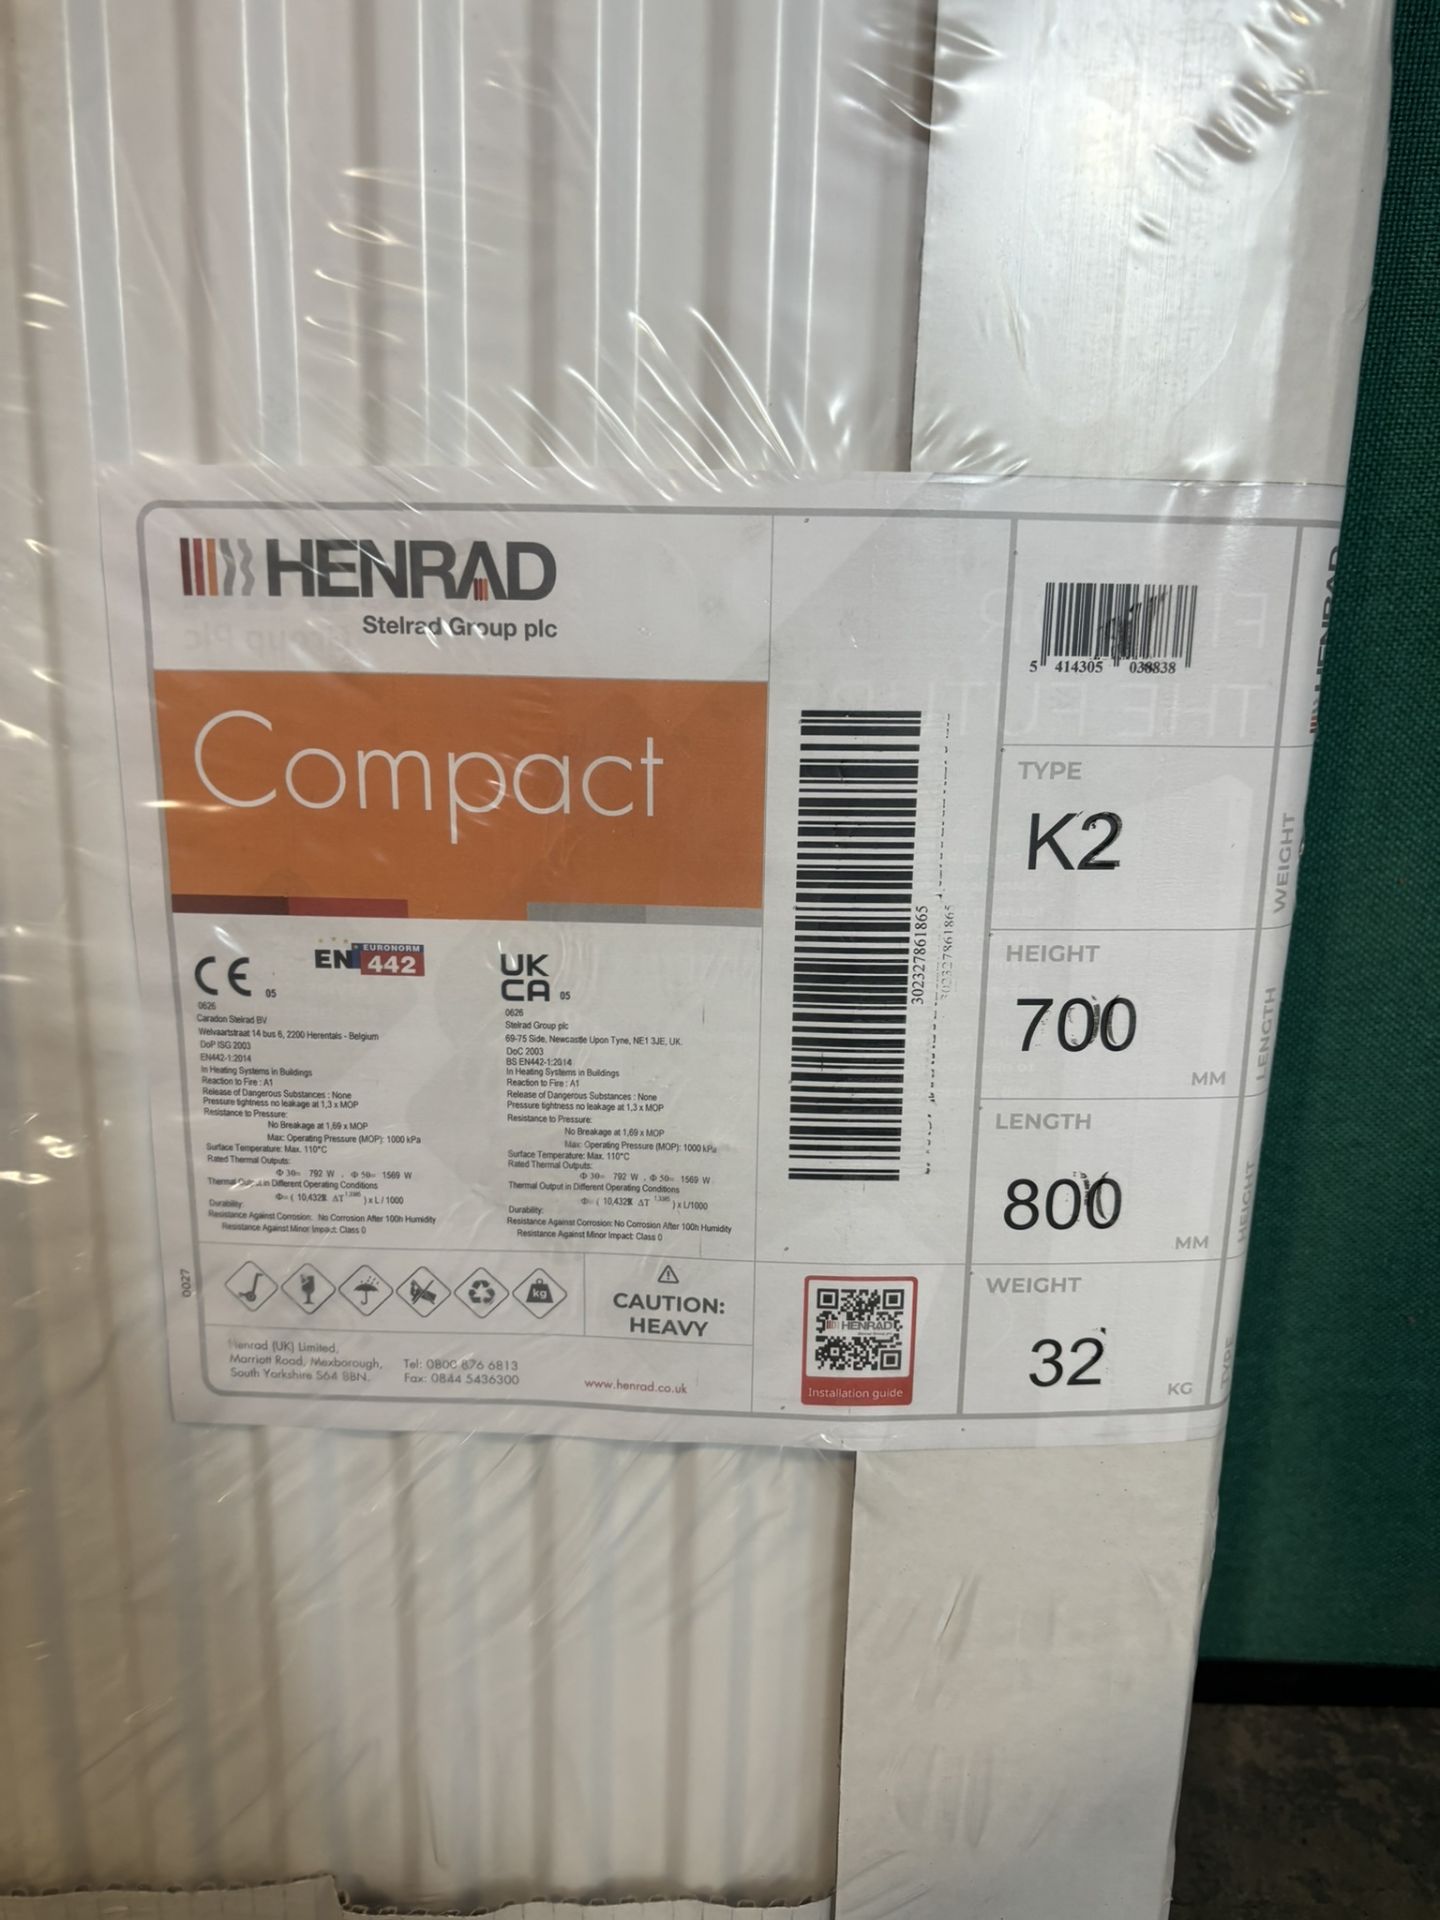 Henrad 700x800 Compact Type 22 Double Panel Double Convector Radiator - Image 2 of 2